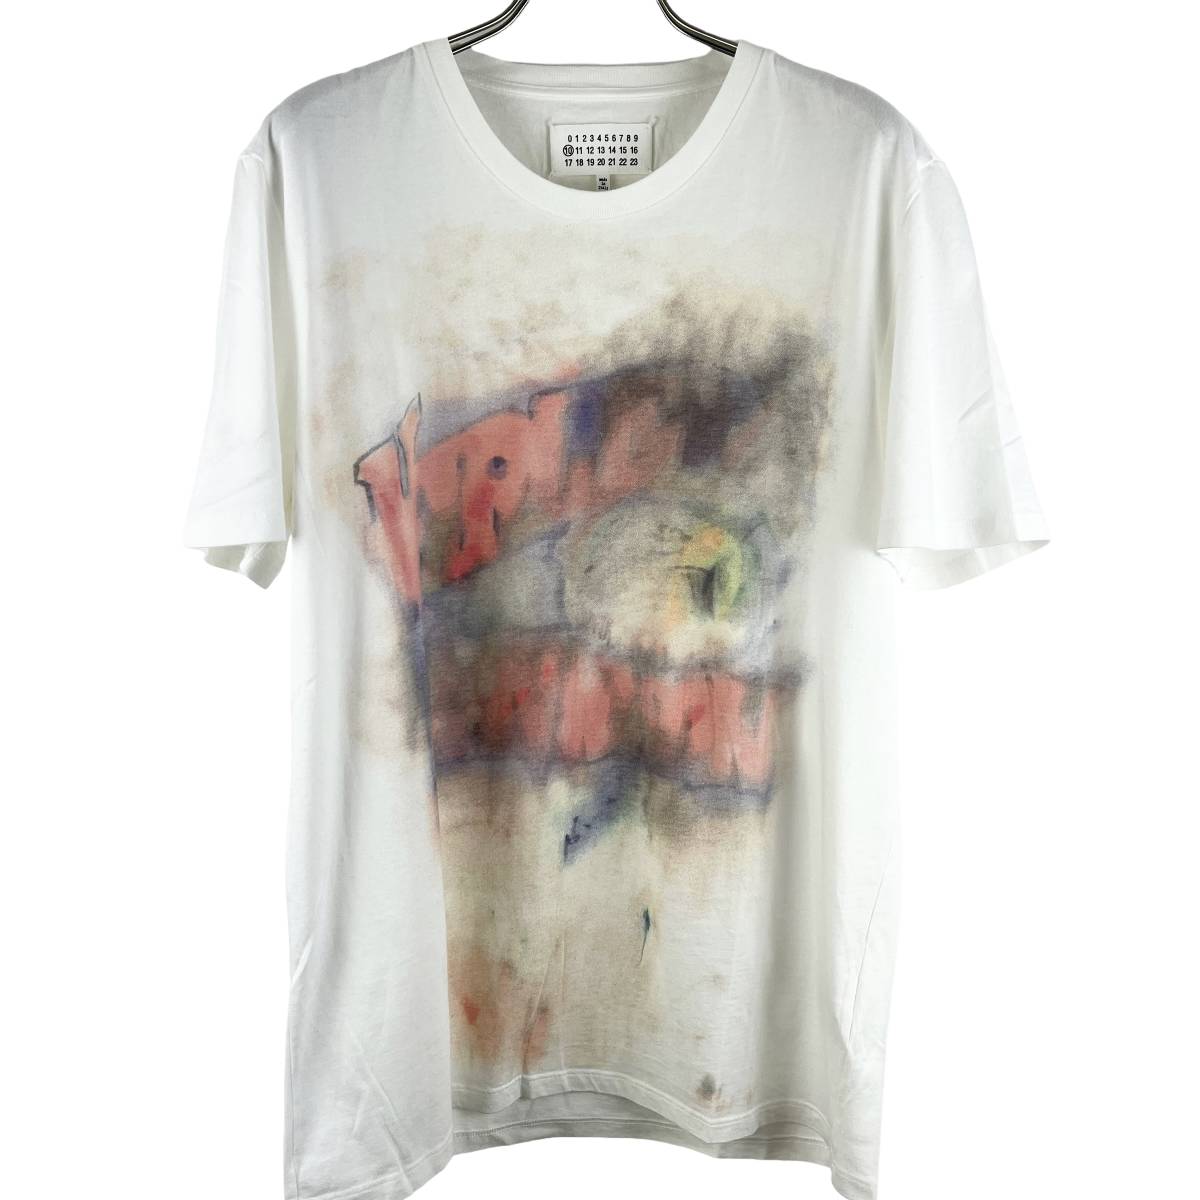 Maison Margiela (メゾン マルジェラ) Faded Graffiti T Shirt (white)